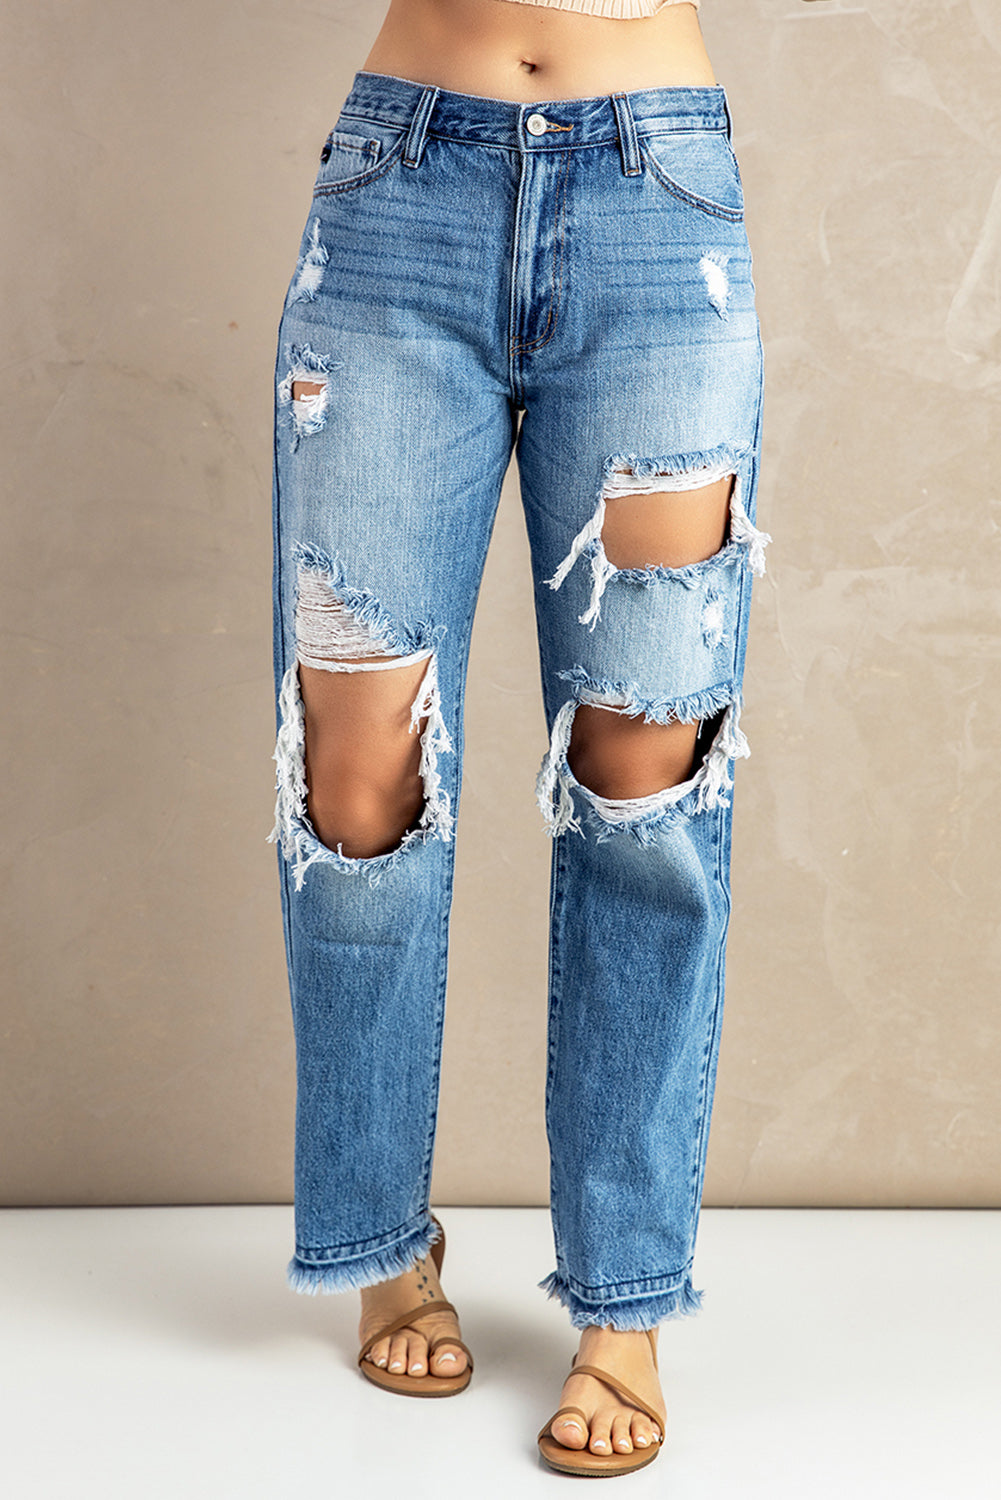 Frayed Hem Distressed Jeans with Pockets - Saveven.com